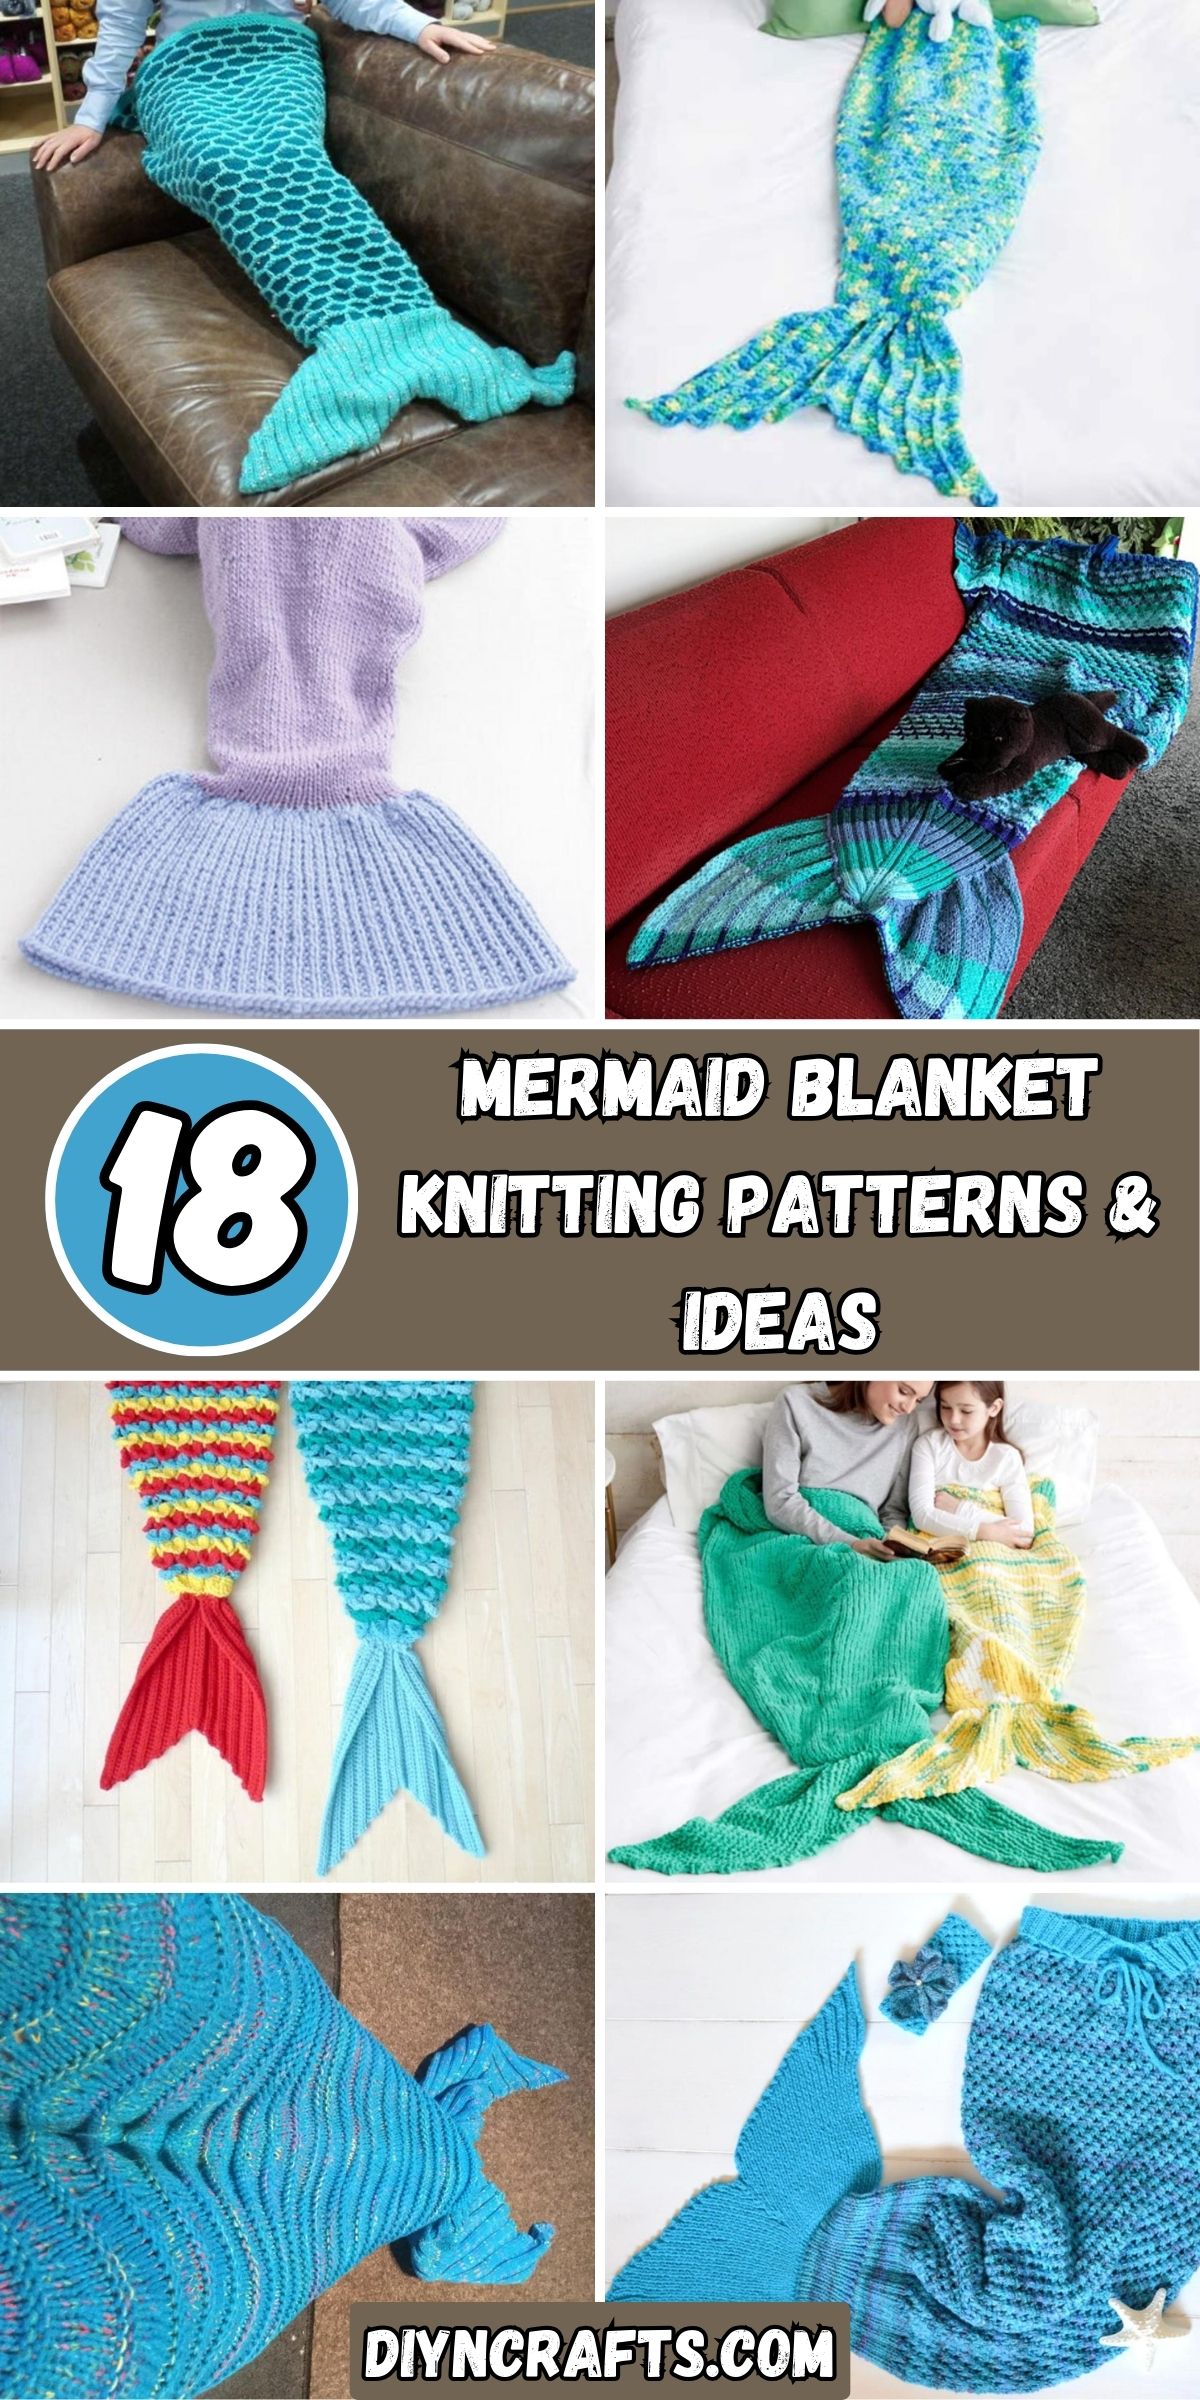 18 Mermaid Blanket Knitting Patterns & Ideas collage.